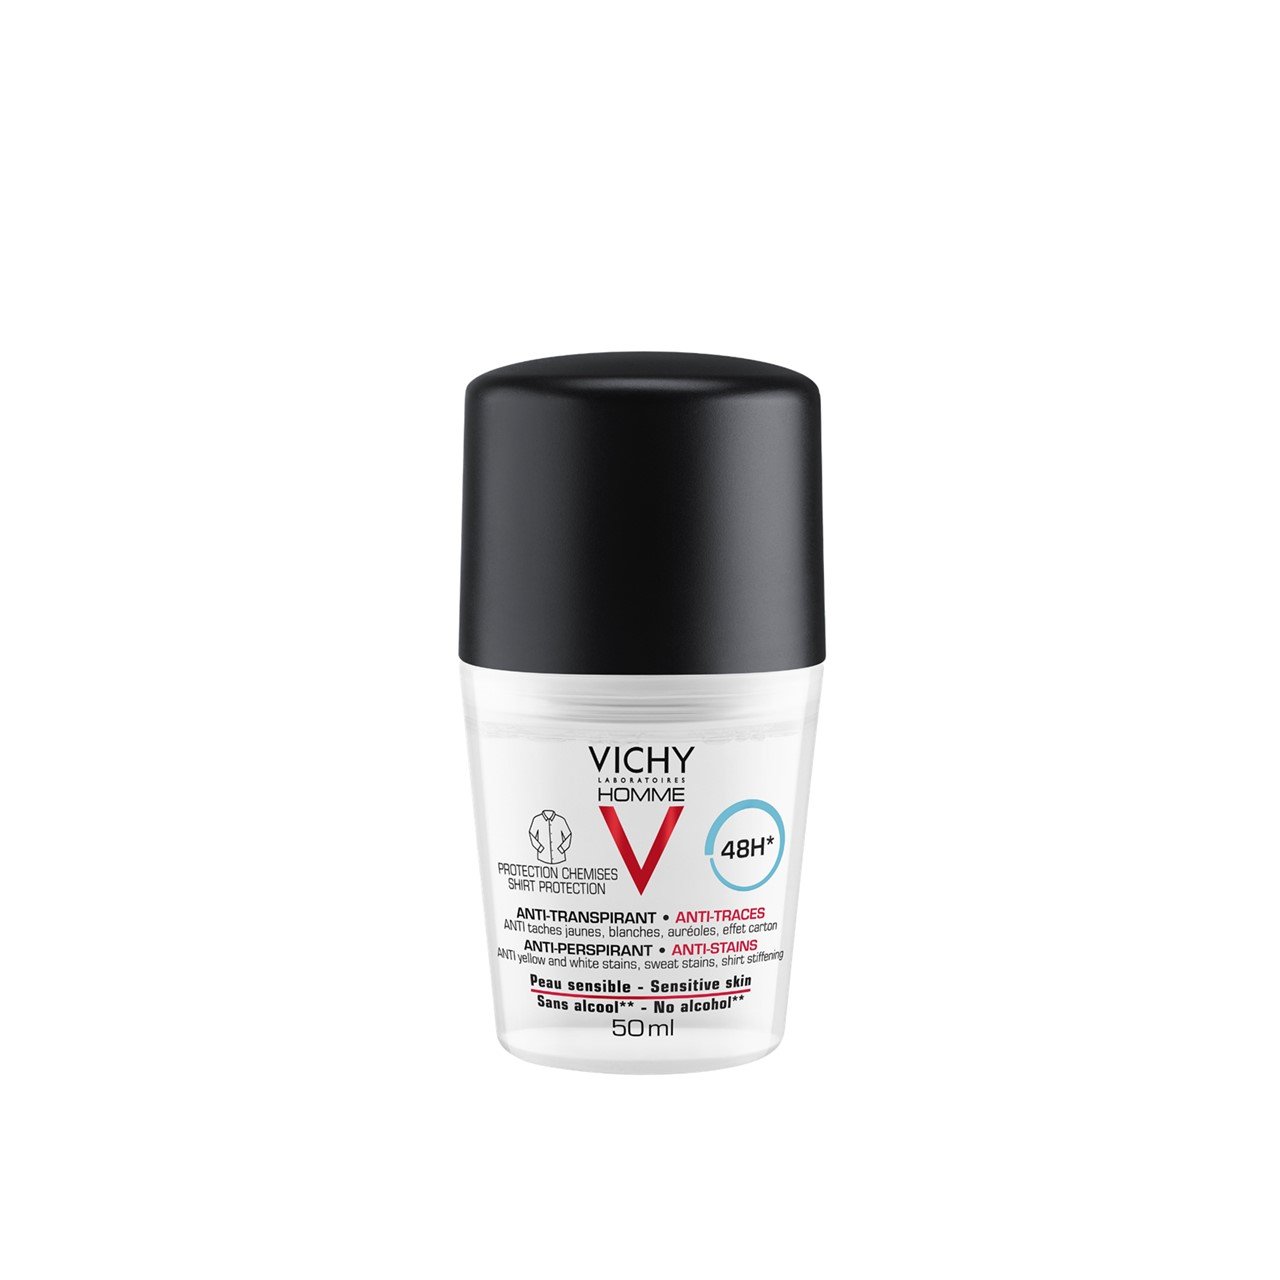 Vichy Homme Deodorant Anti-Perspirant Anti-Stains 48h 50ml